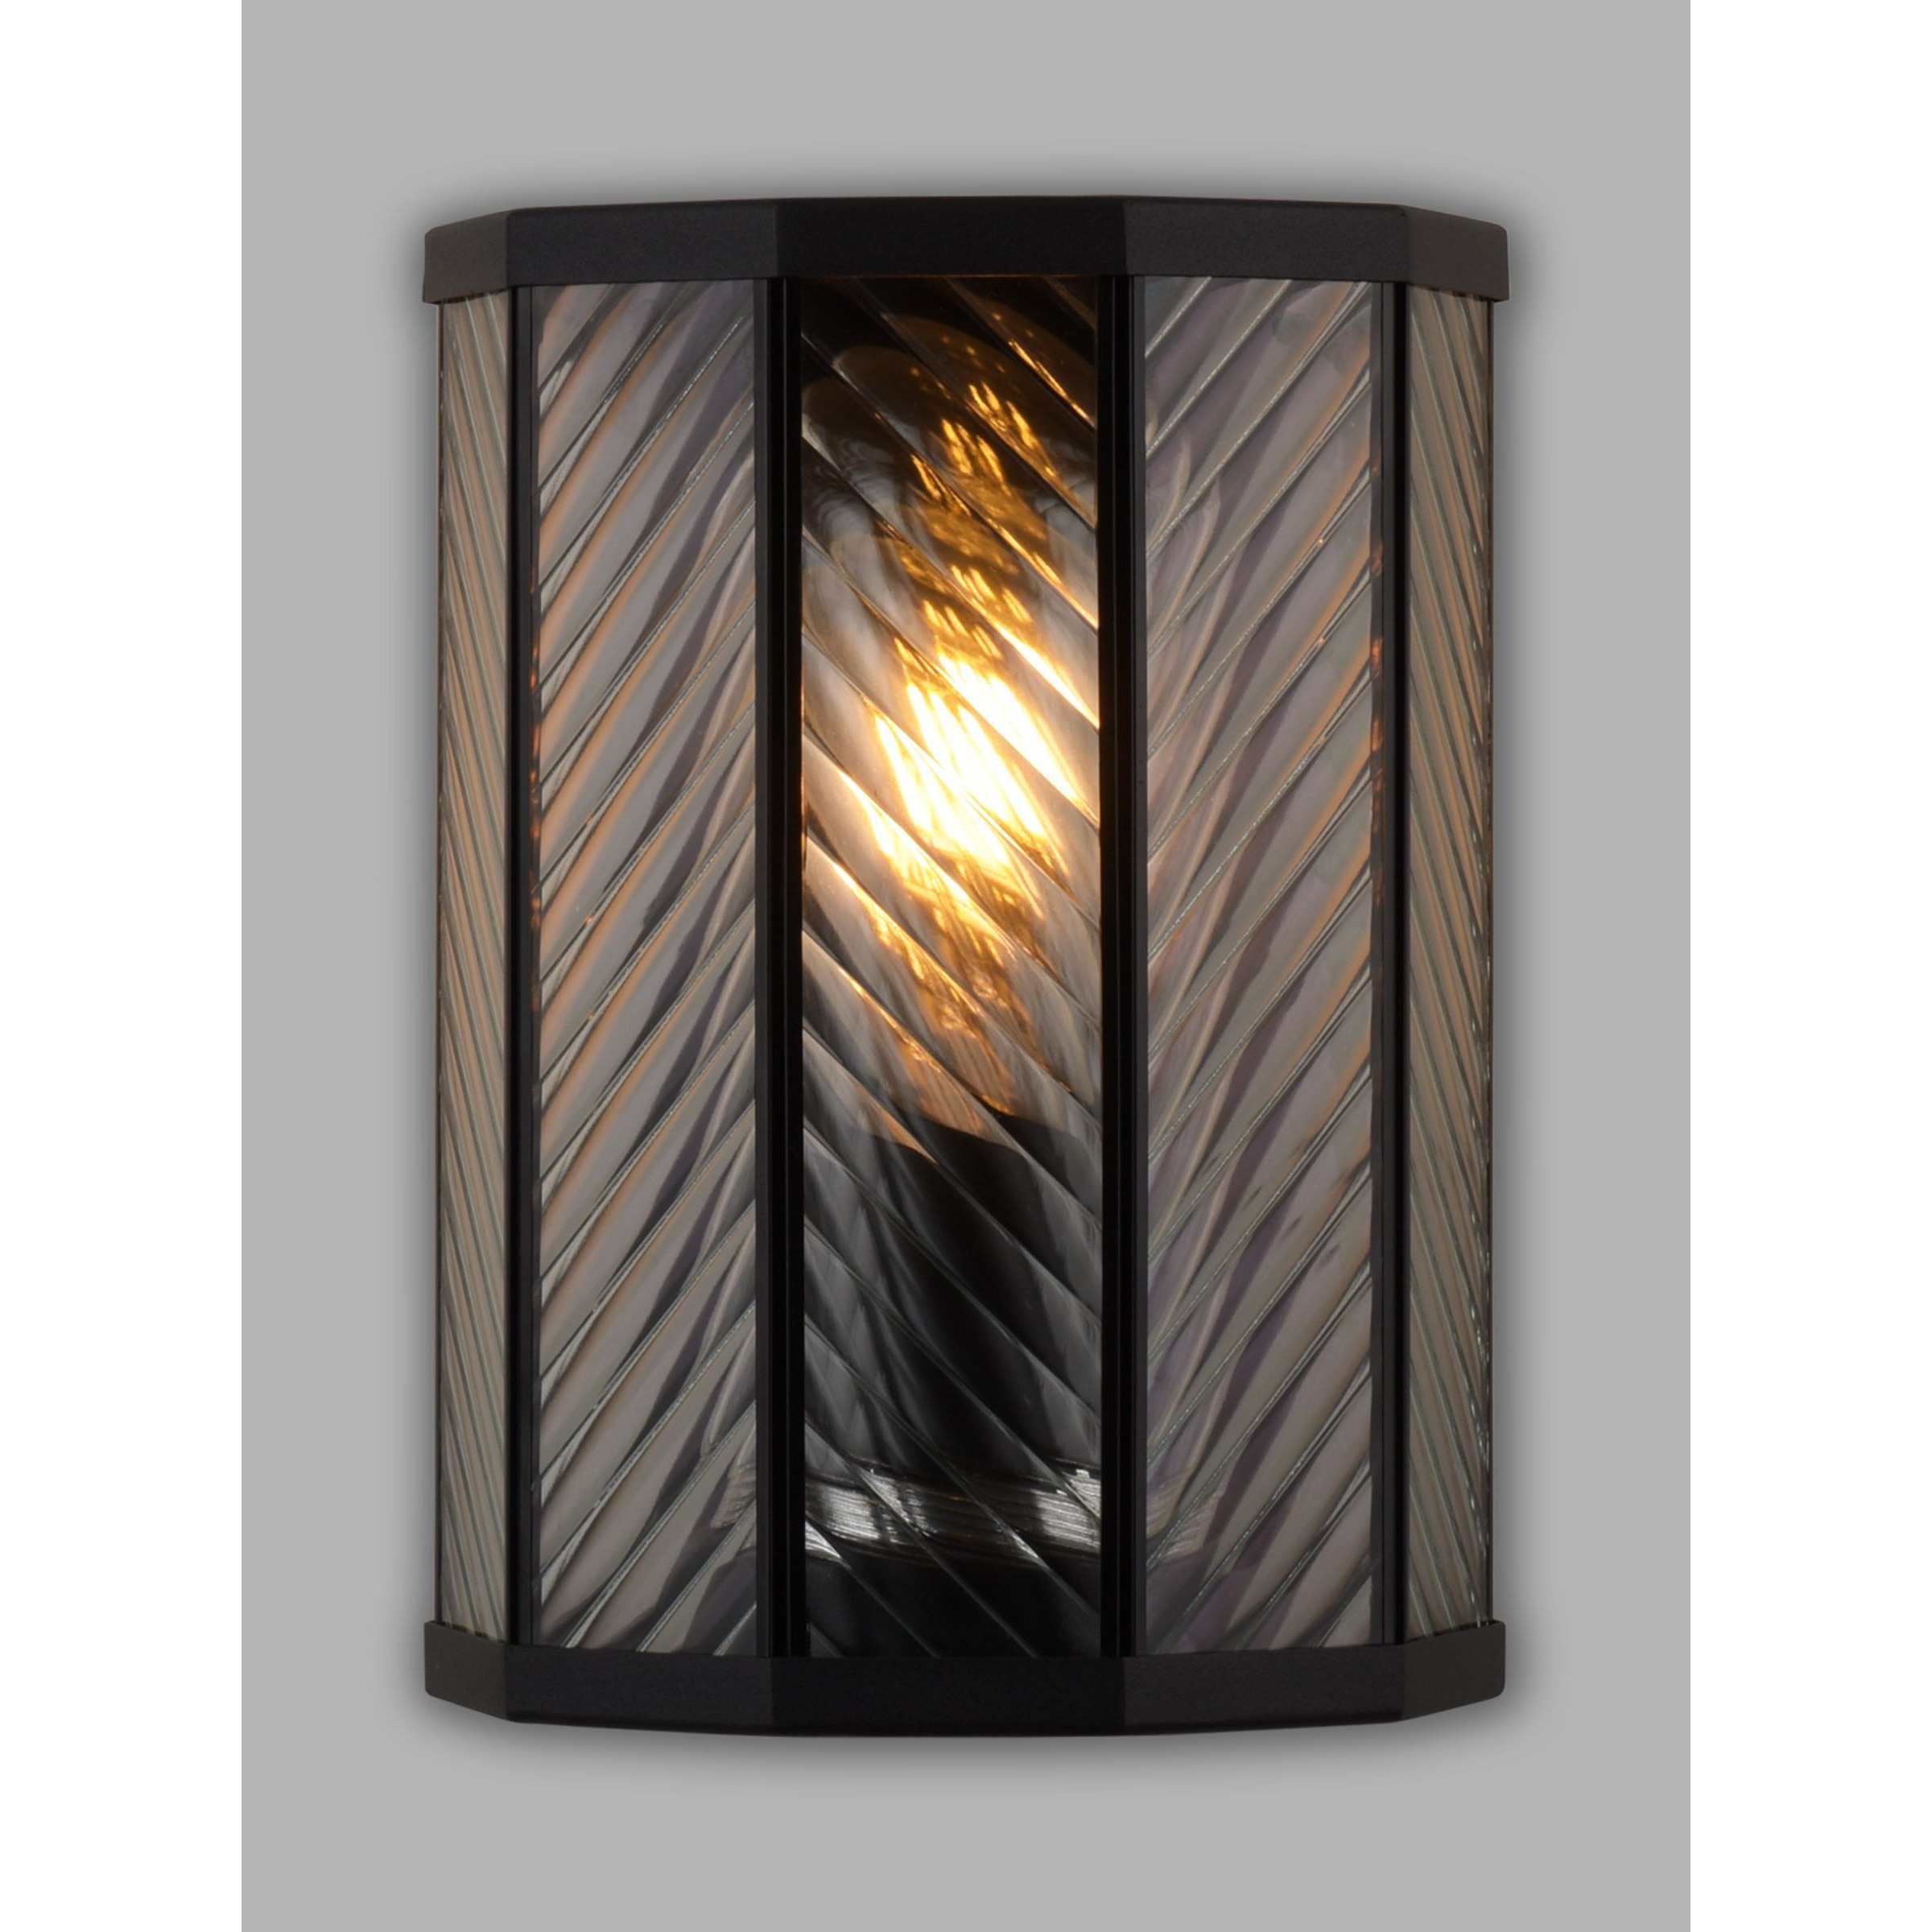 John Lewis Herringbone Glass Outdoor Wall Light, Clear/Black - image 1